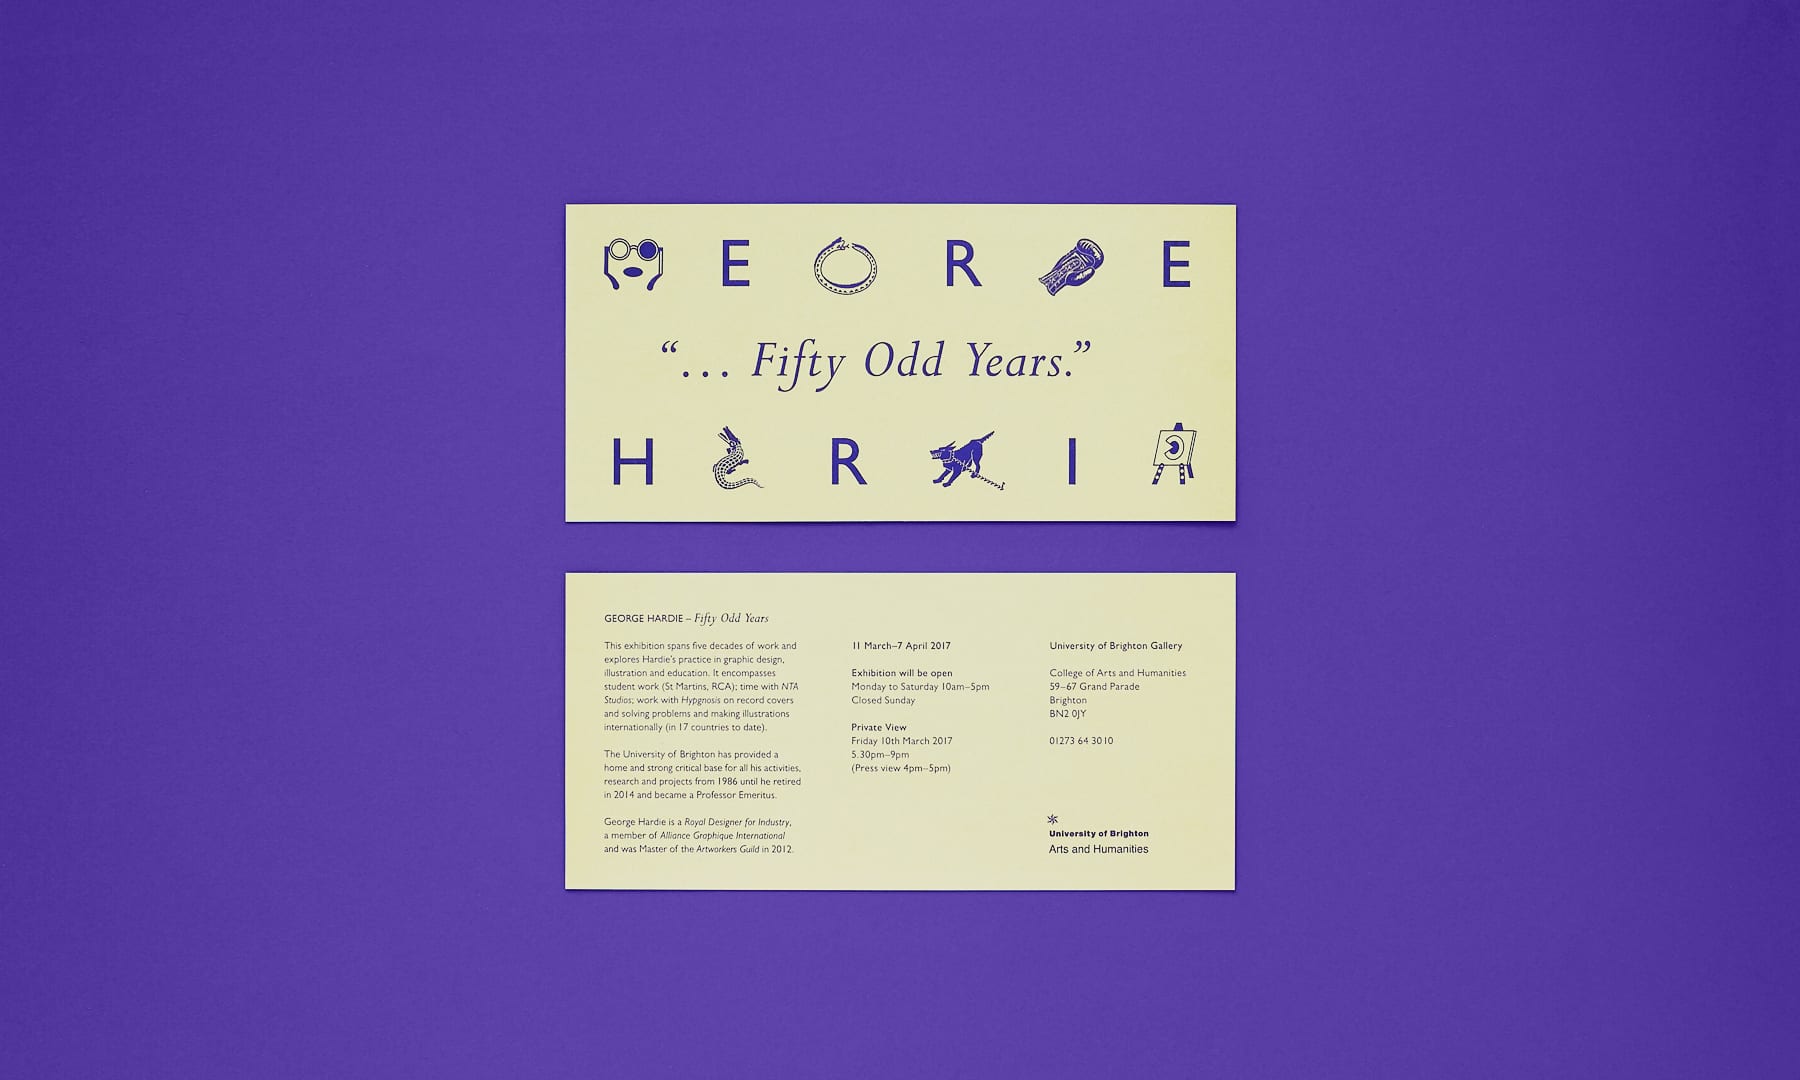 Fifty Odd Years - George Hardie - printed invitation 3